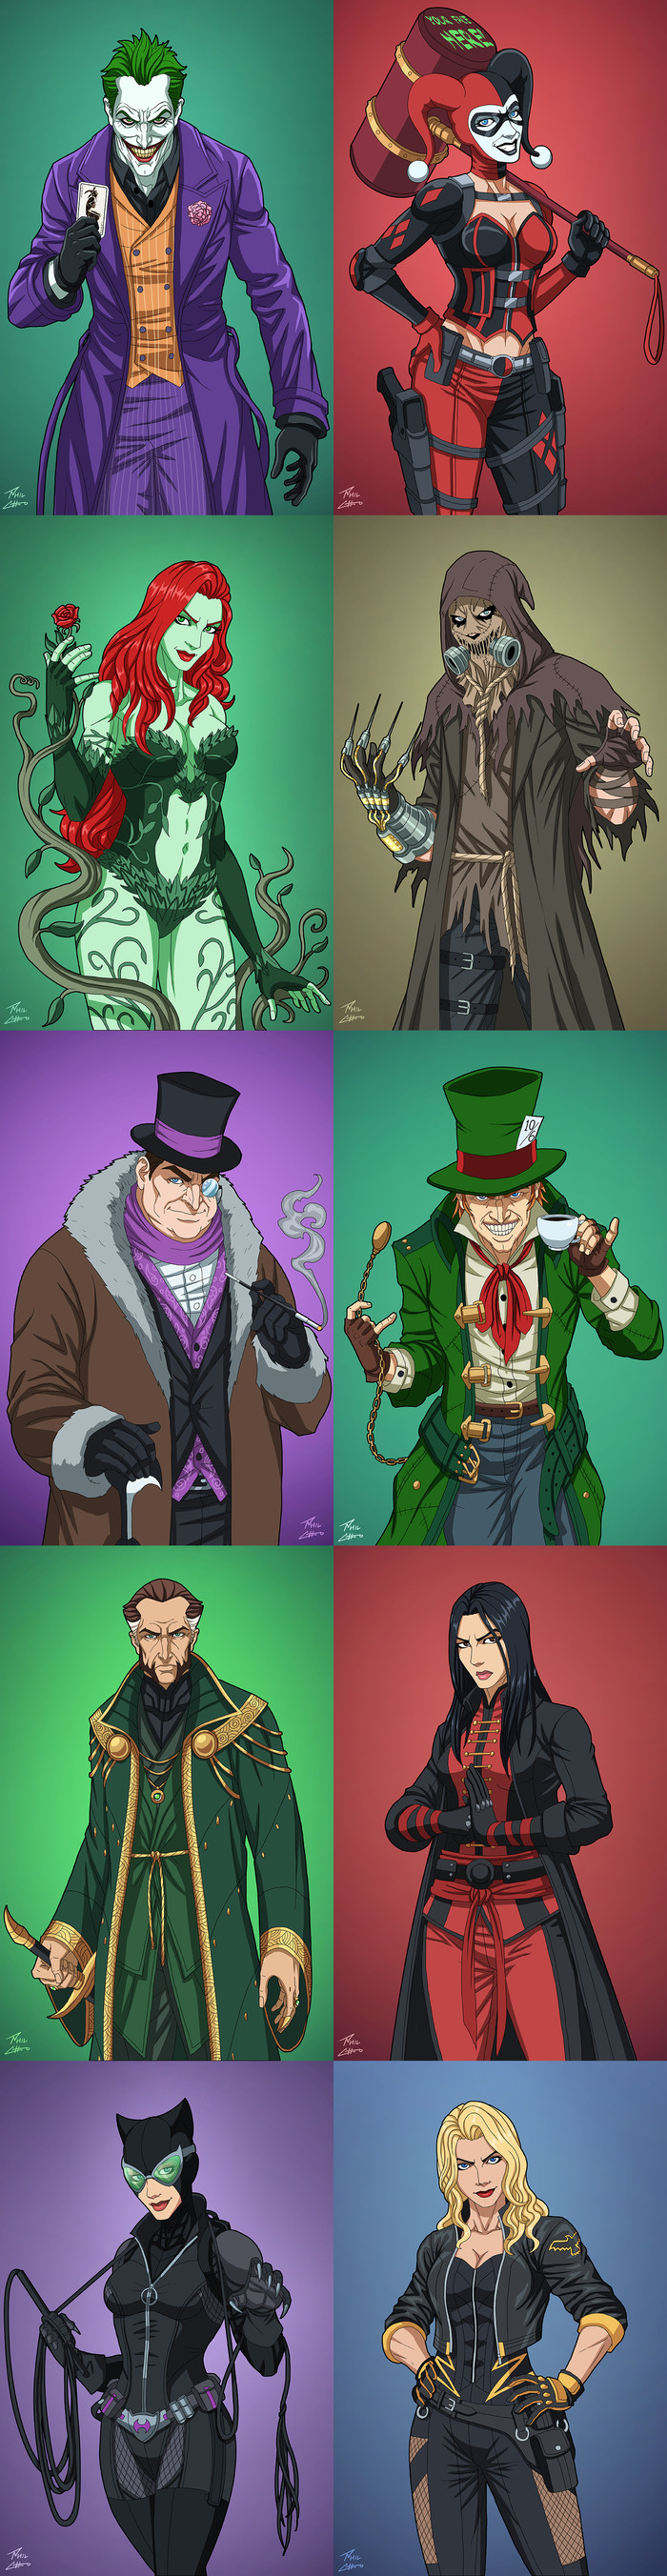 Characters from the DC Comics universe by artist Phil Cho. - DC, Dc comics, Superheroes, Comics, Art, The flash, Marvel, X-Men, Longpost